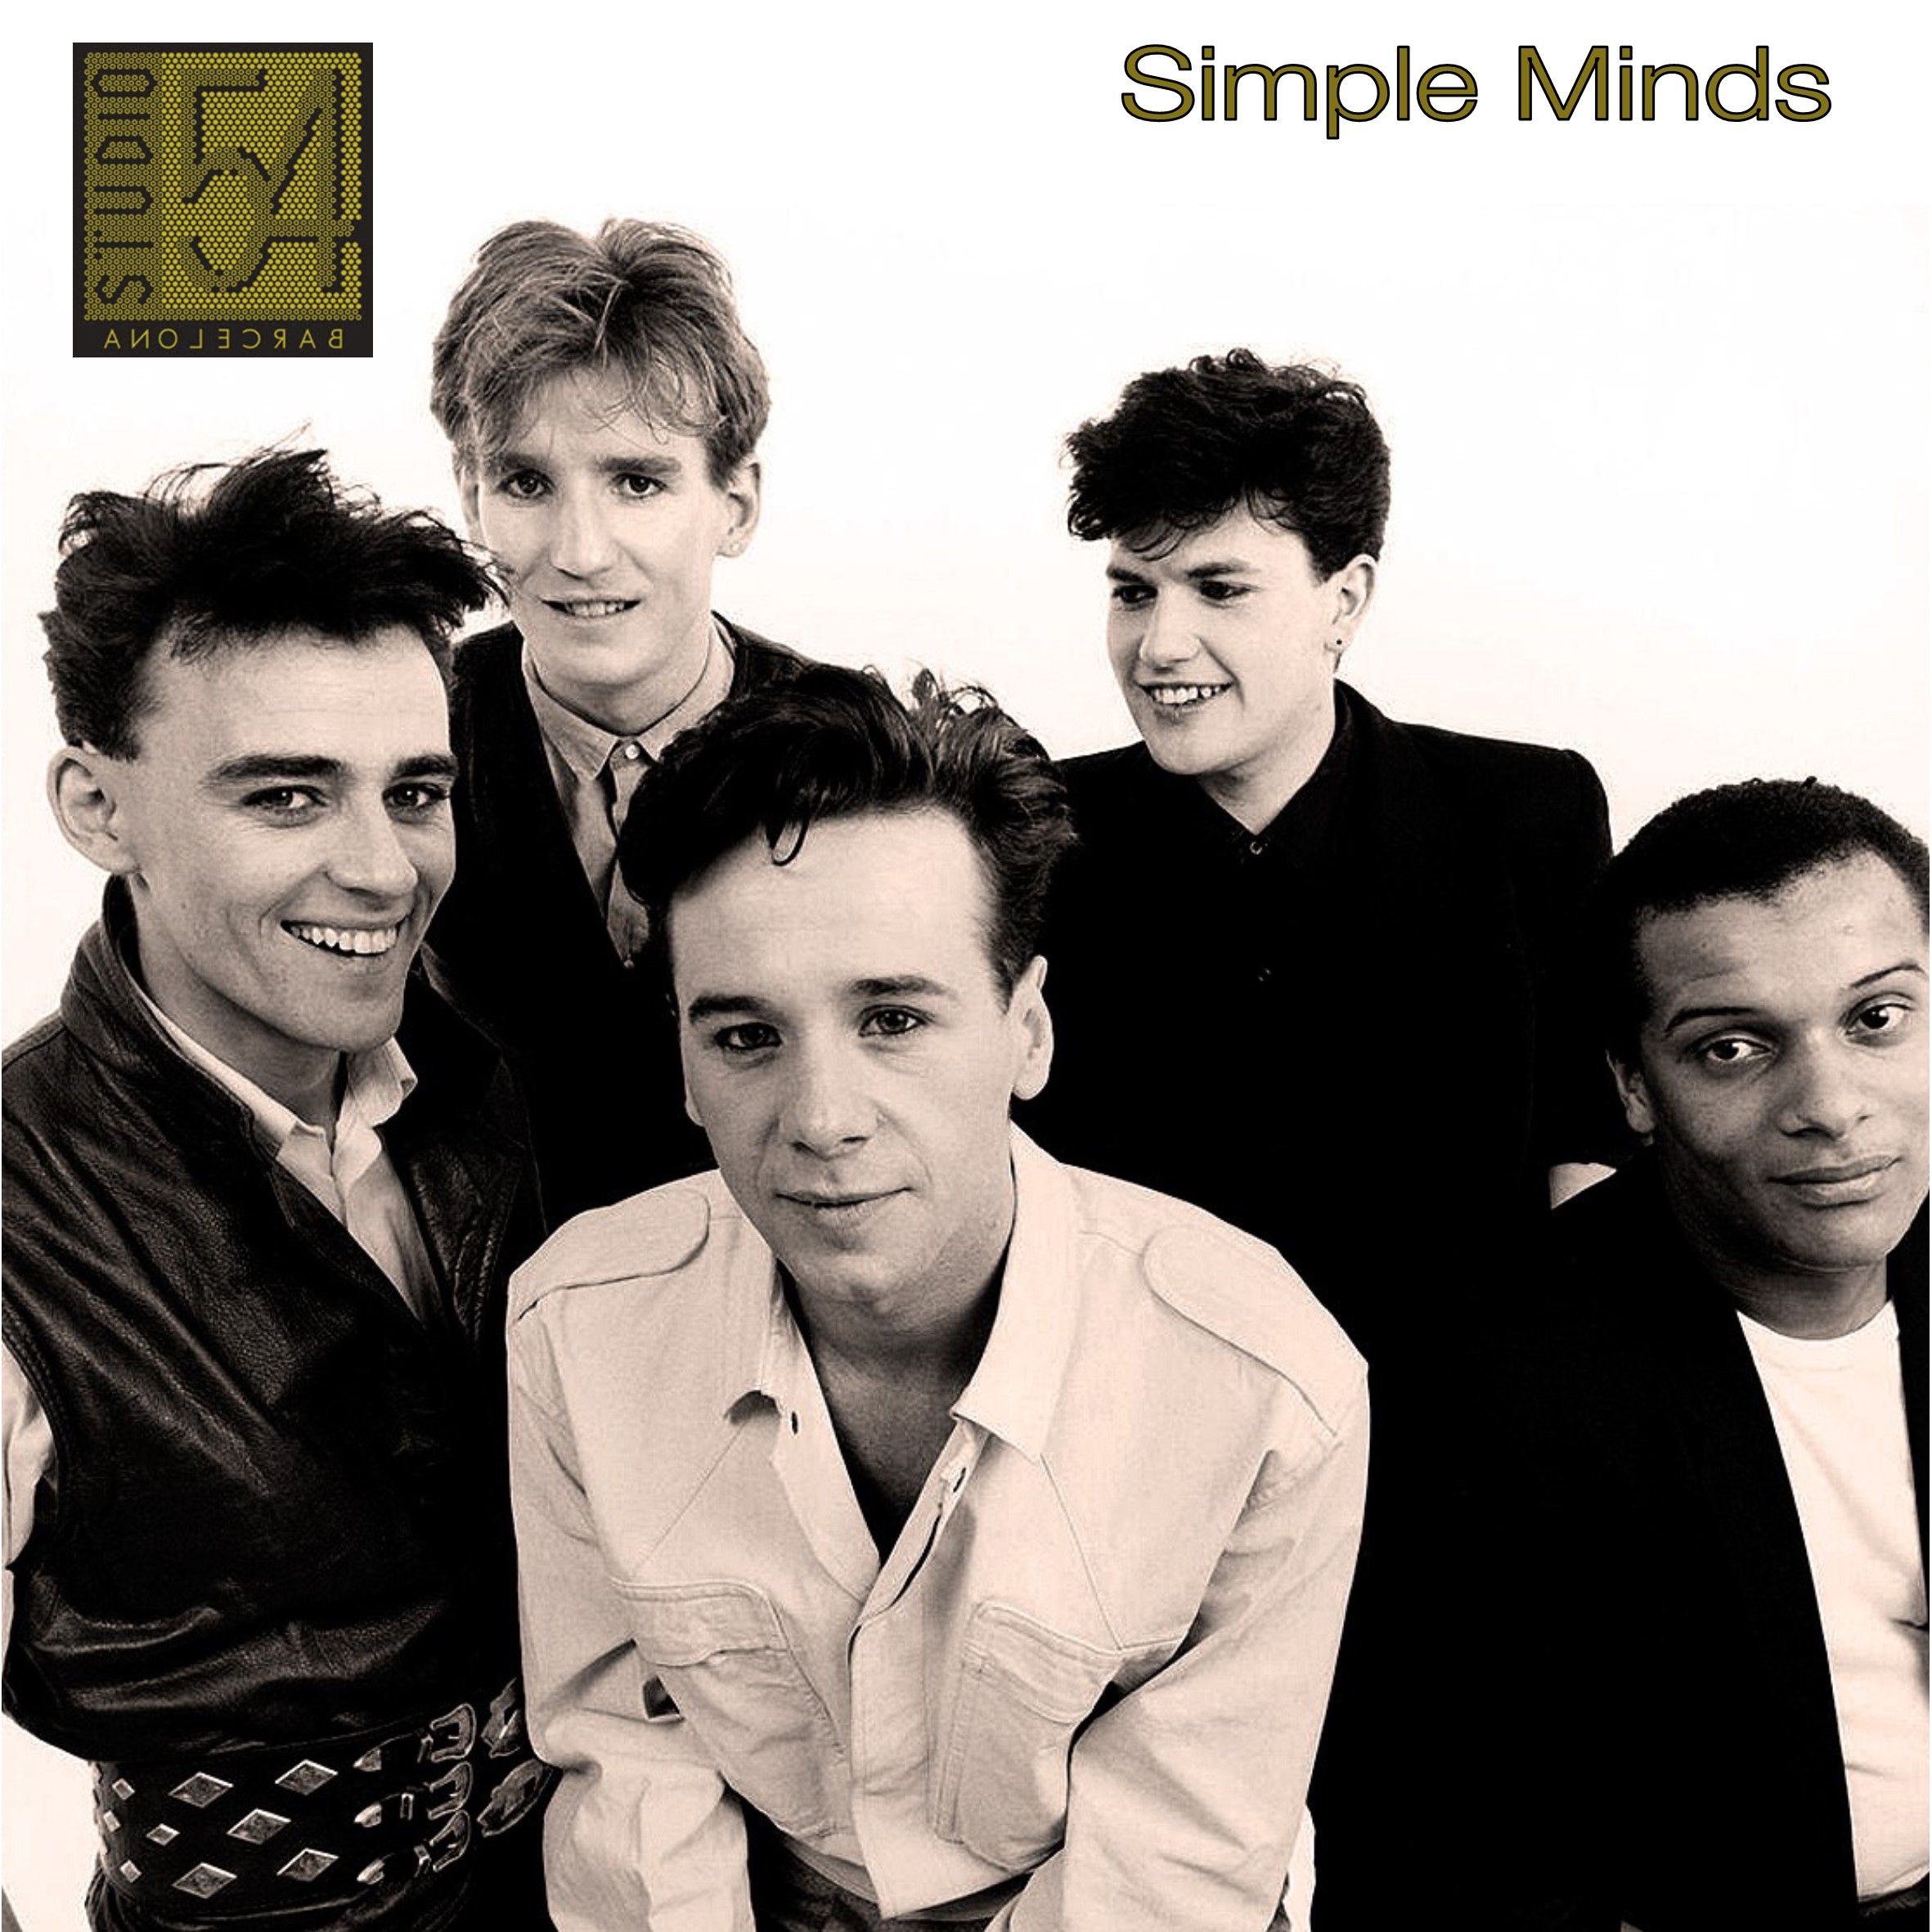 Simple Minds - Studio 54 Barcelona - Topdisco Radio